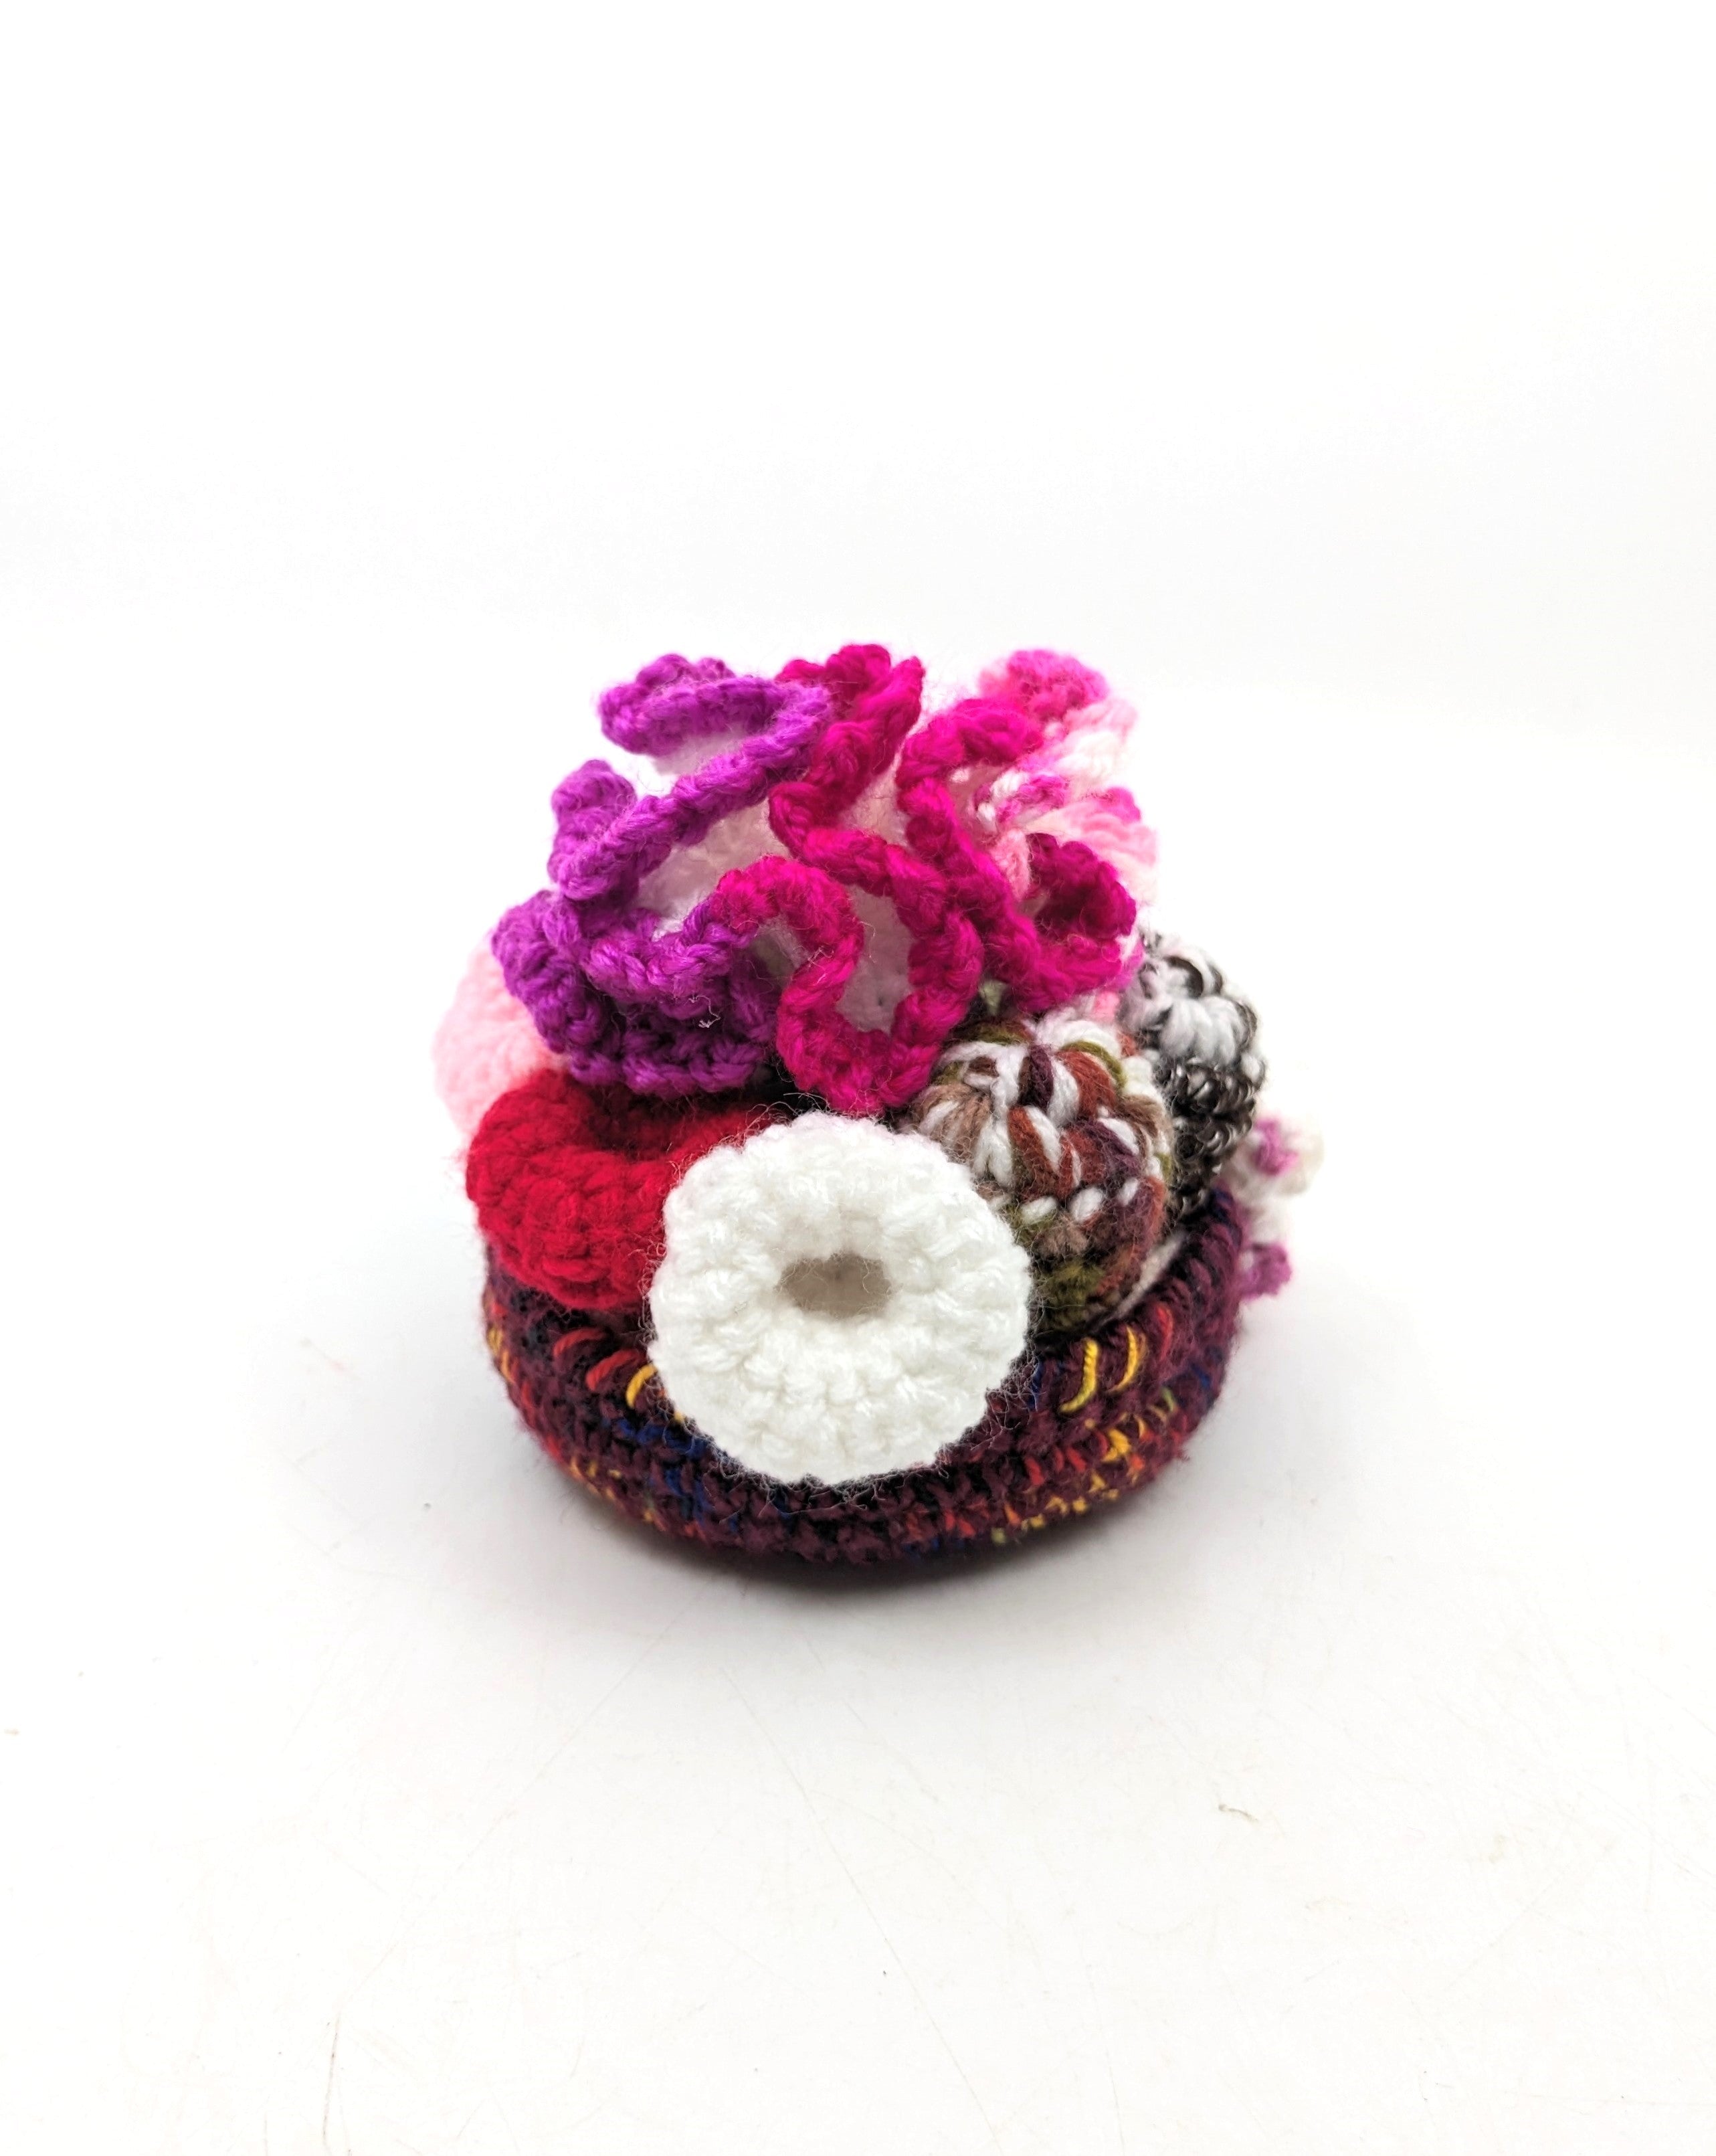 Indoor Mini Garden - Millie Radovic Textiles & Fibre Art Artisan 